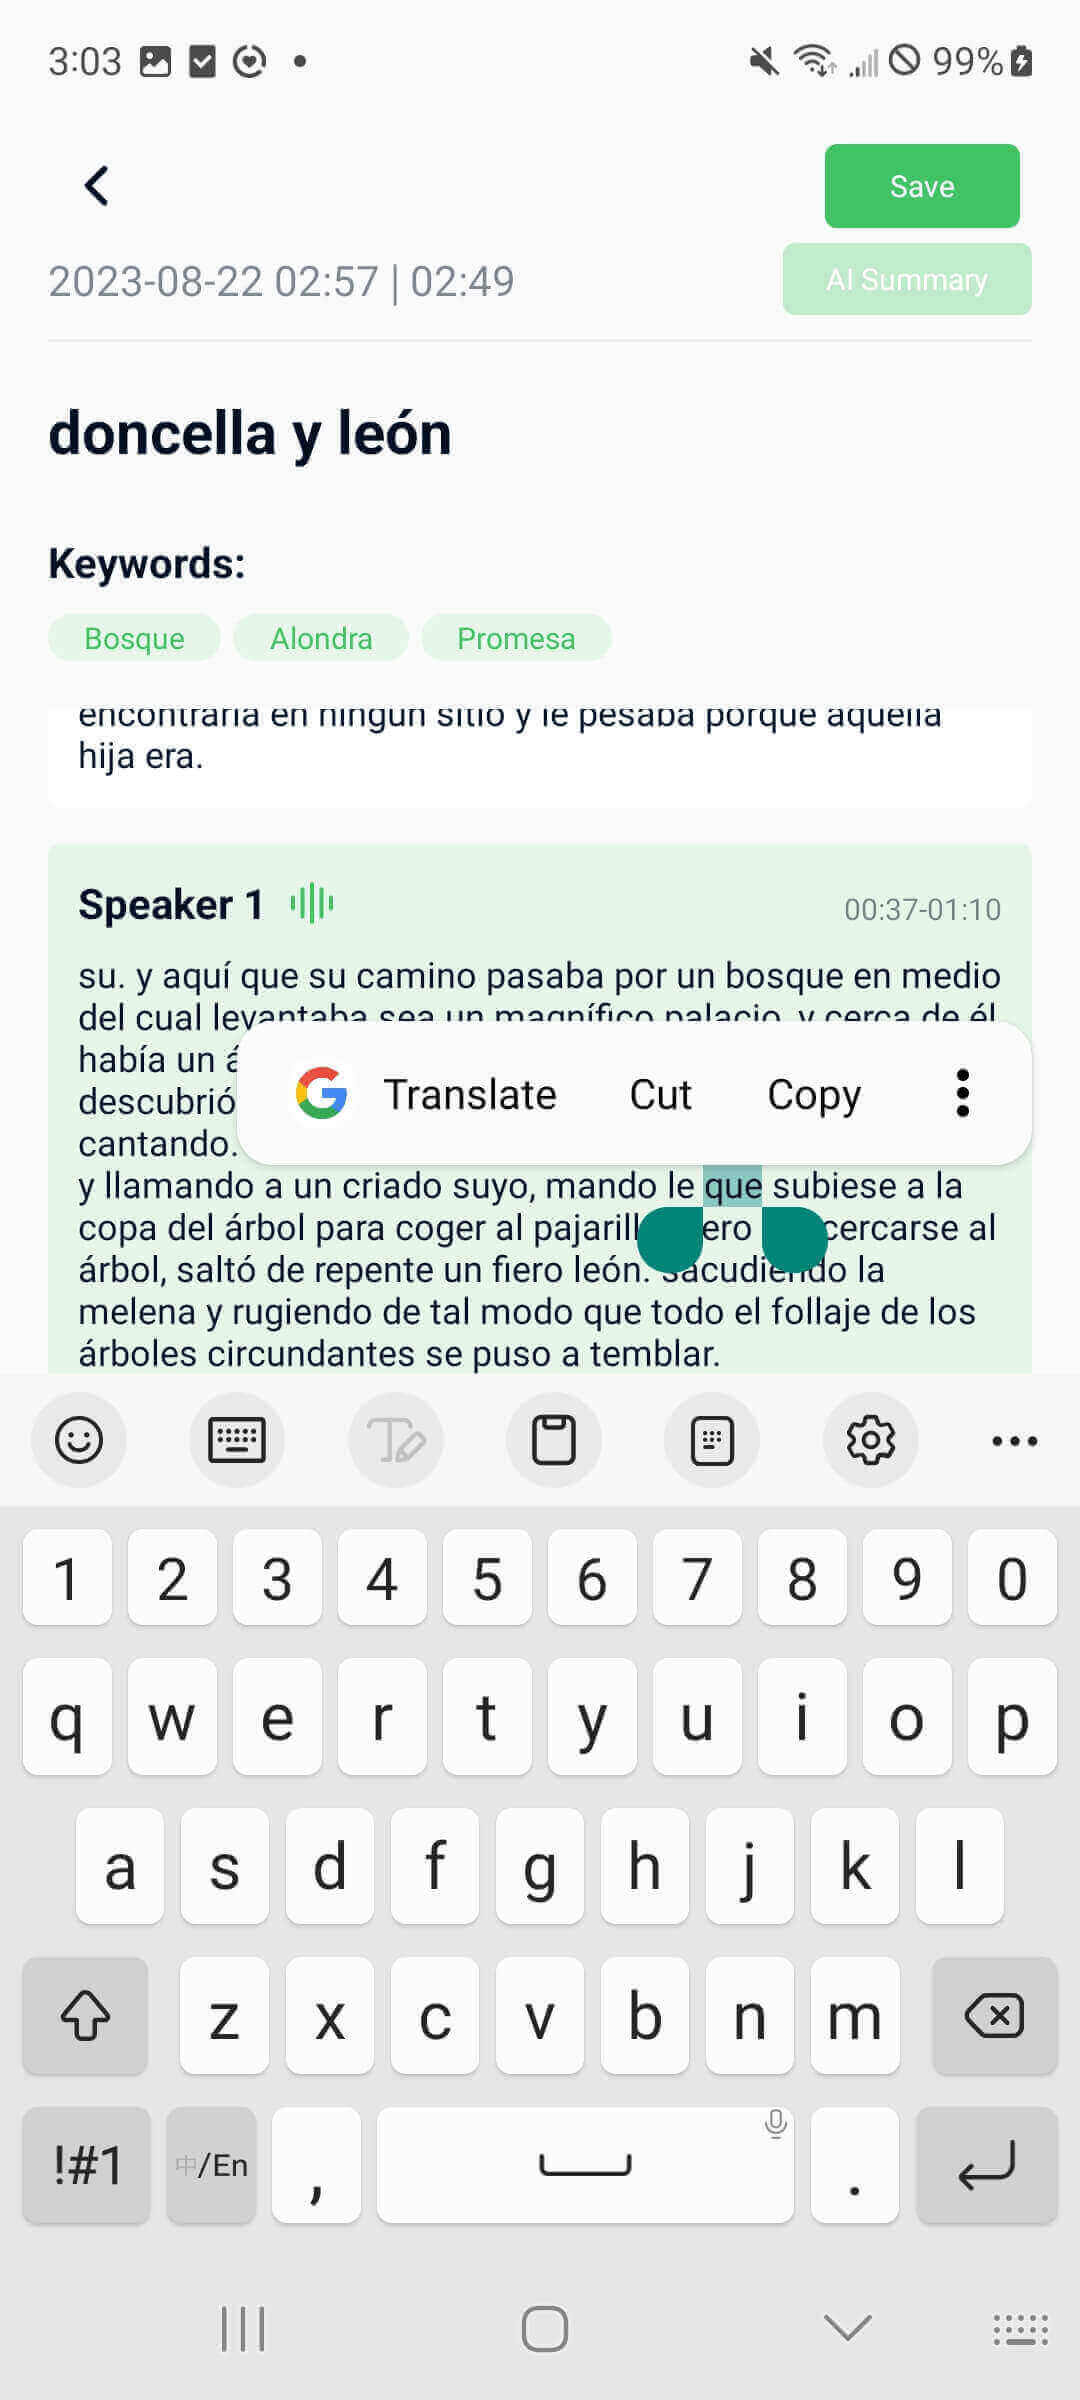 edit your spanish transcription